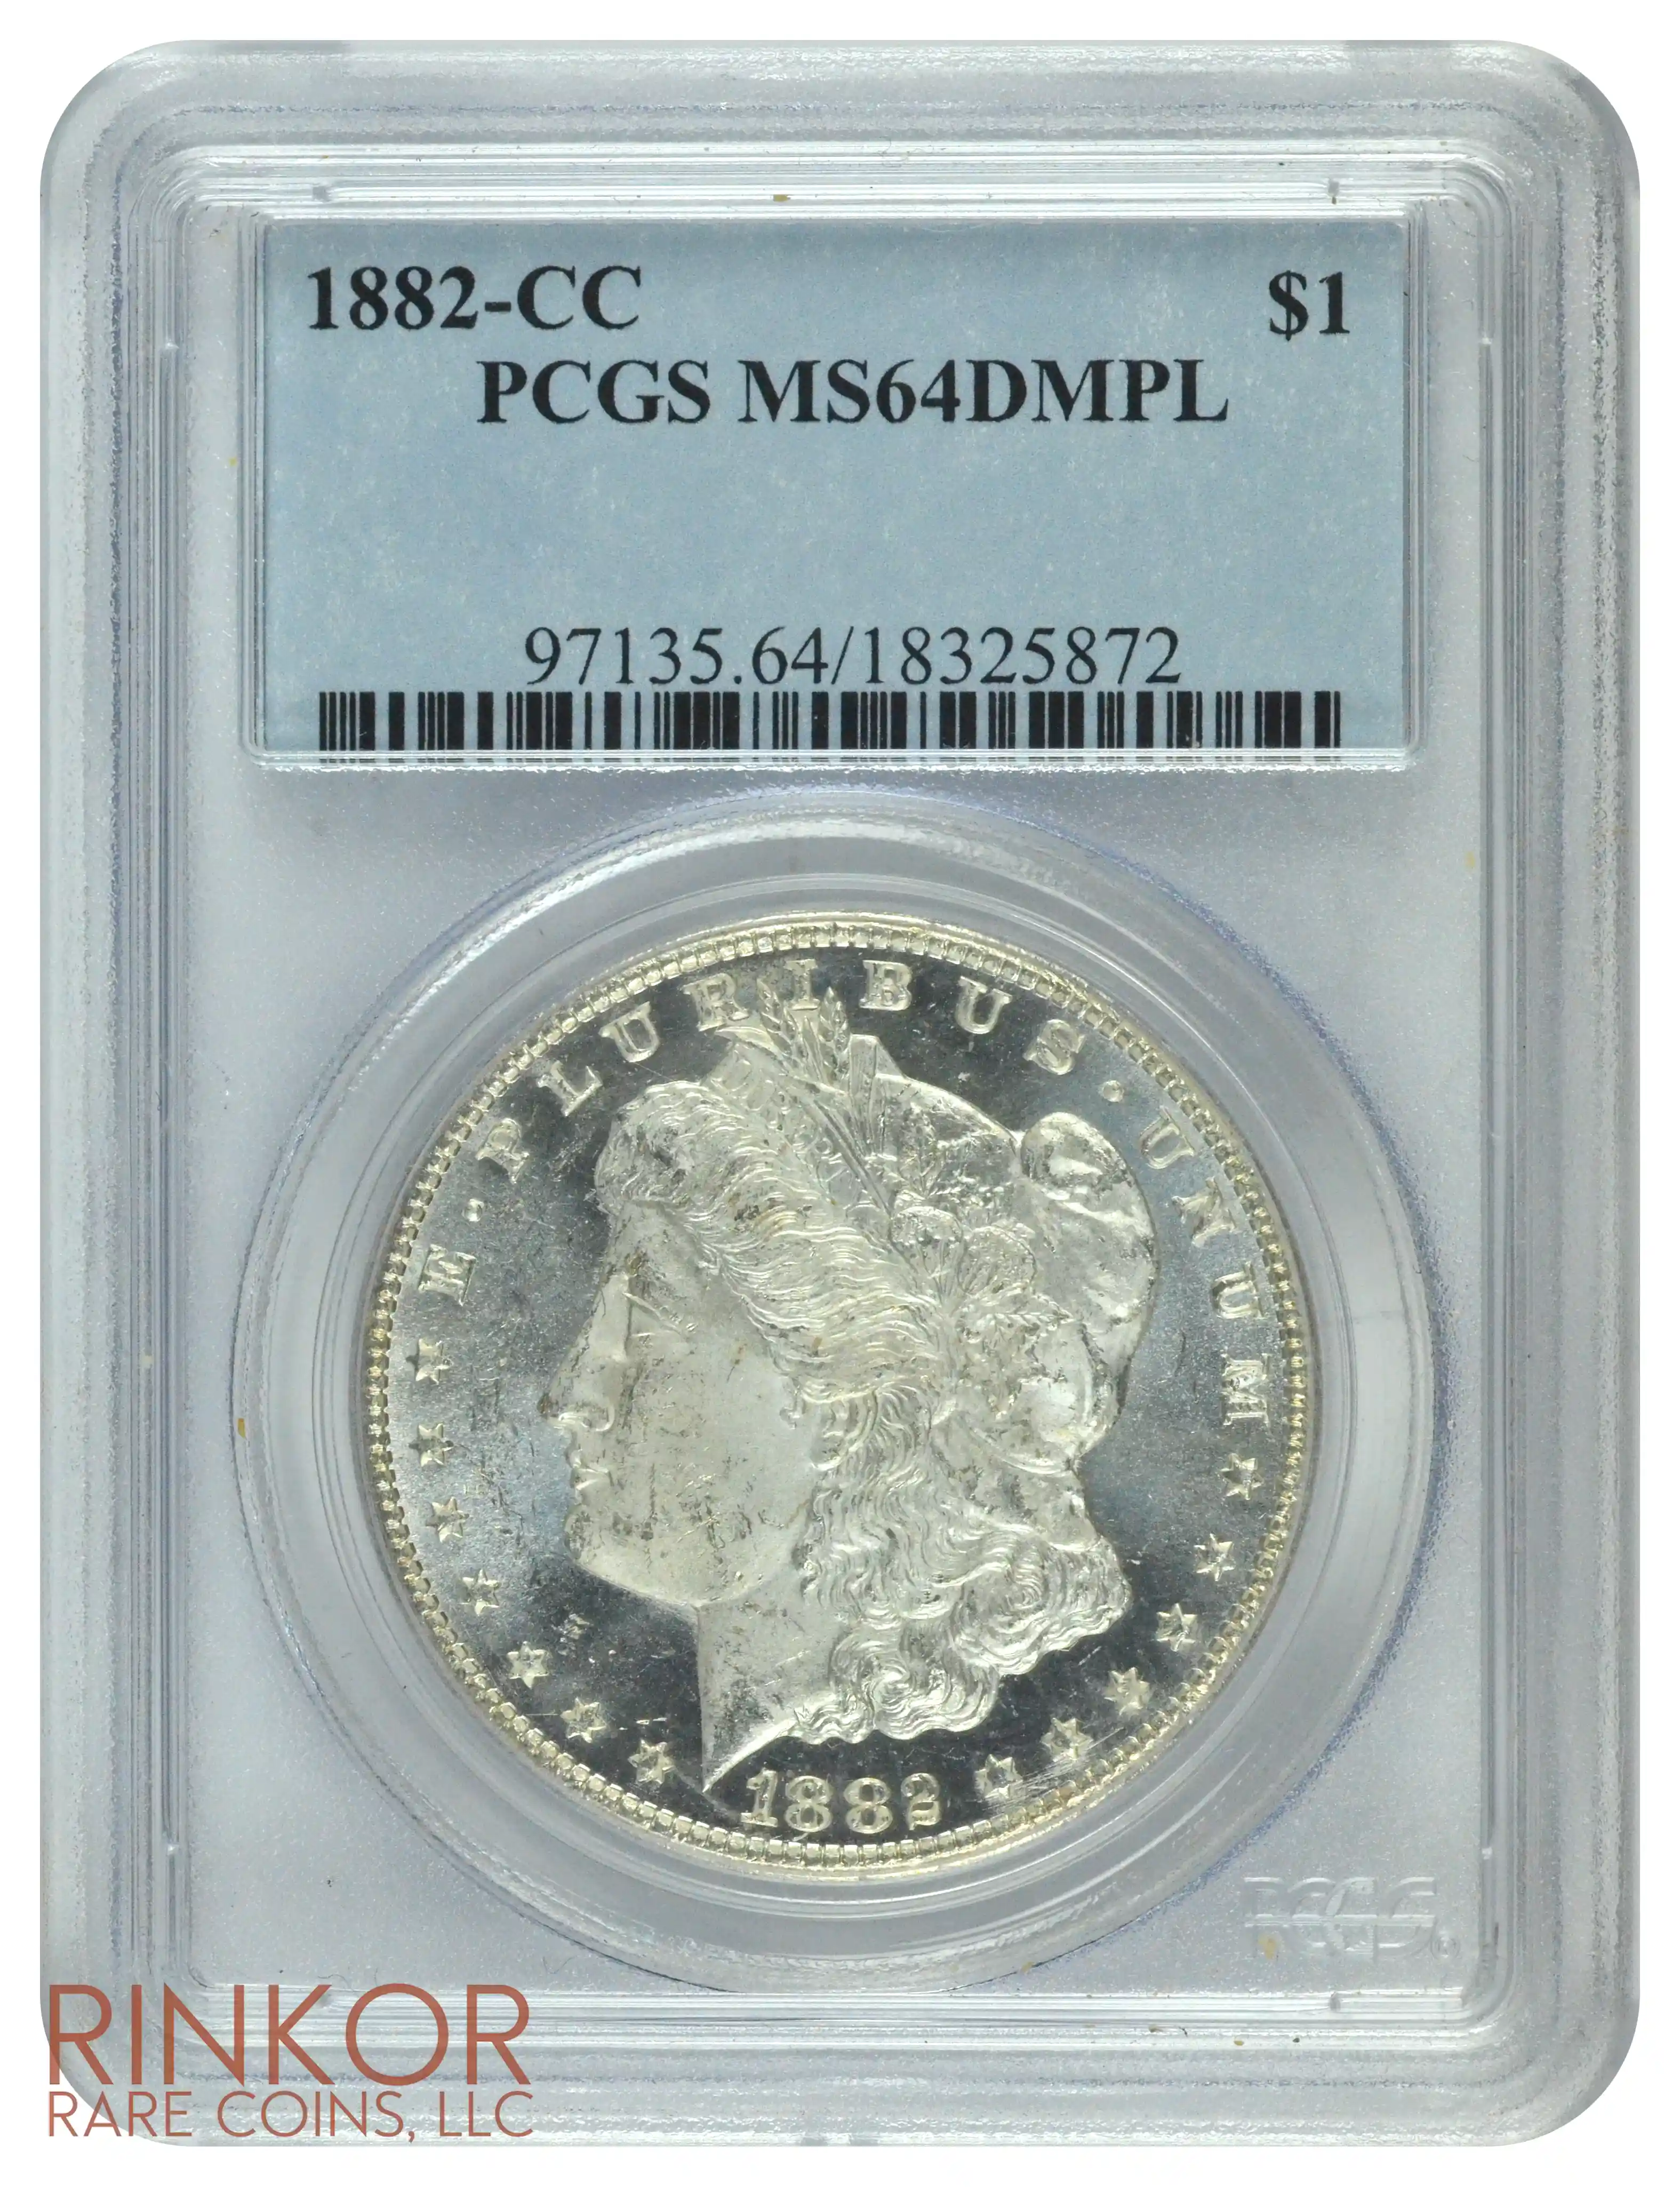 1882-CC $1 PCGS MS 64 DMPL 